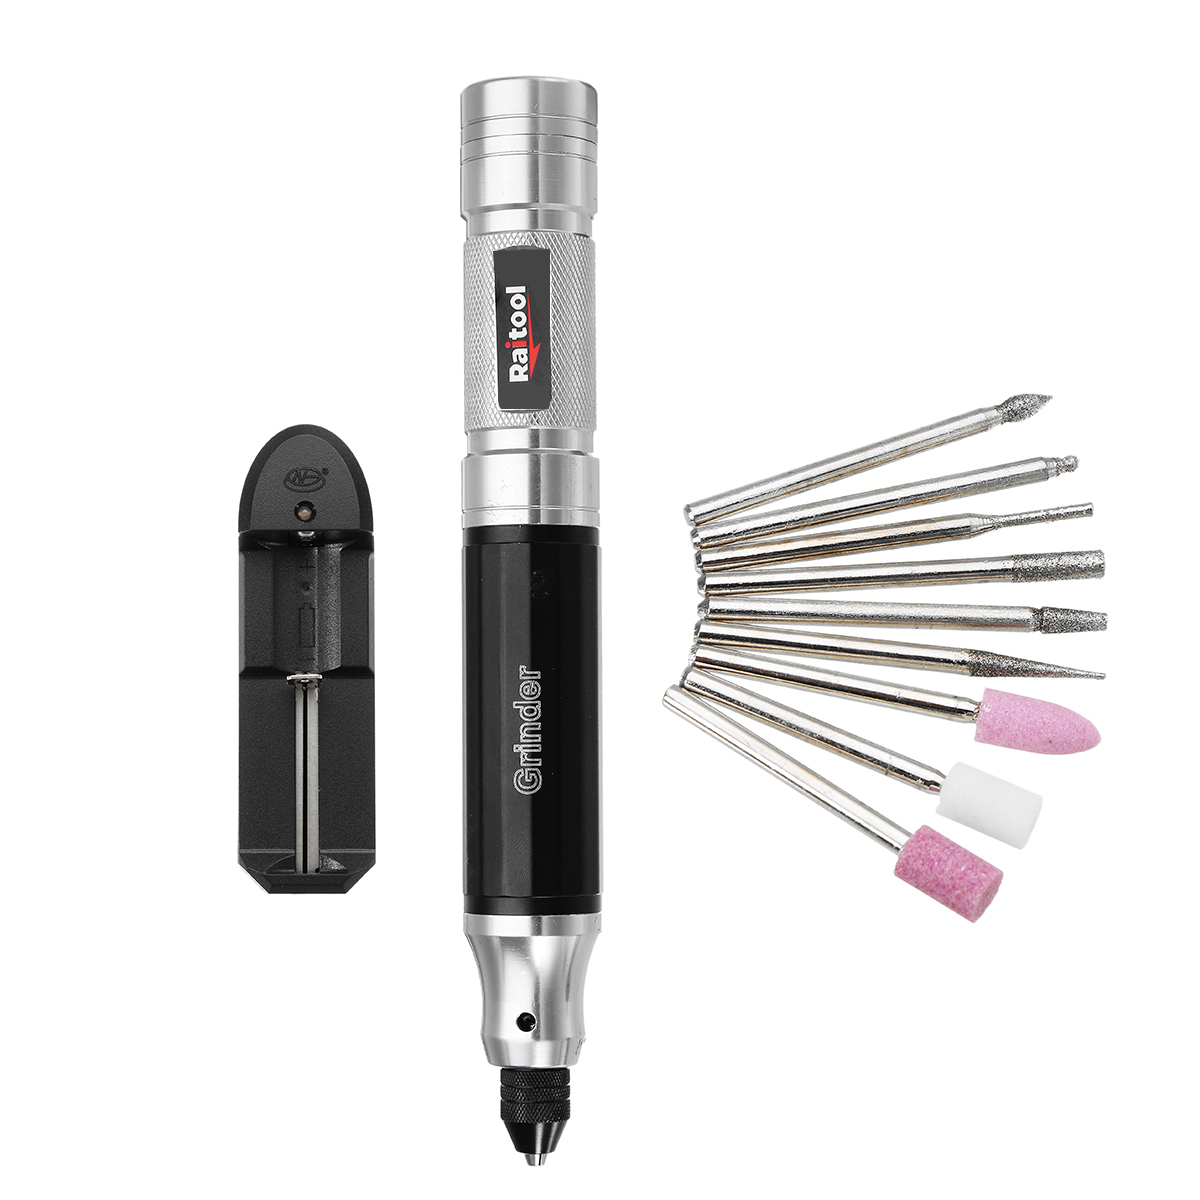 Raitool™ 3.7V 35W Mini Power Drills Electric Grinder Cordless Engraving Pen 13